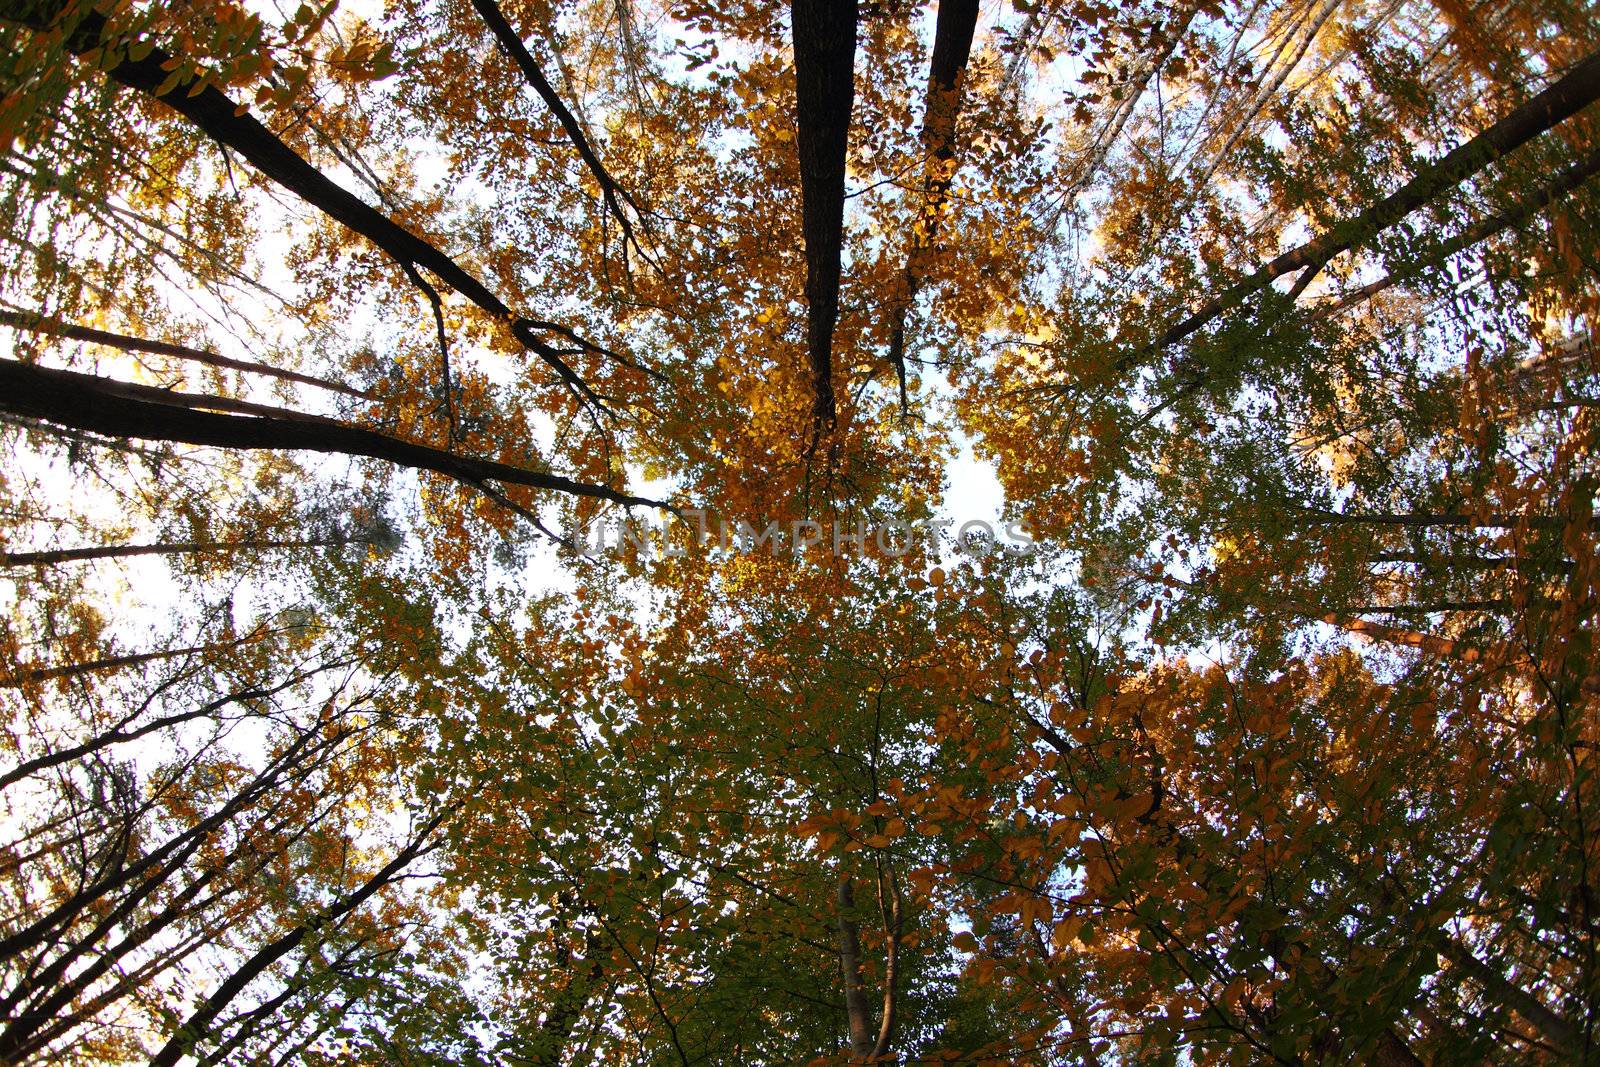 autumn forest  by jonnysek